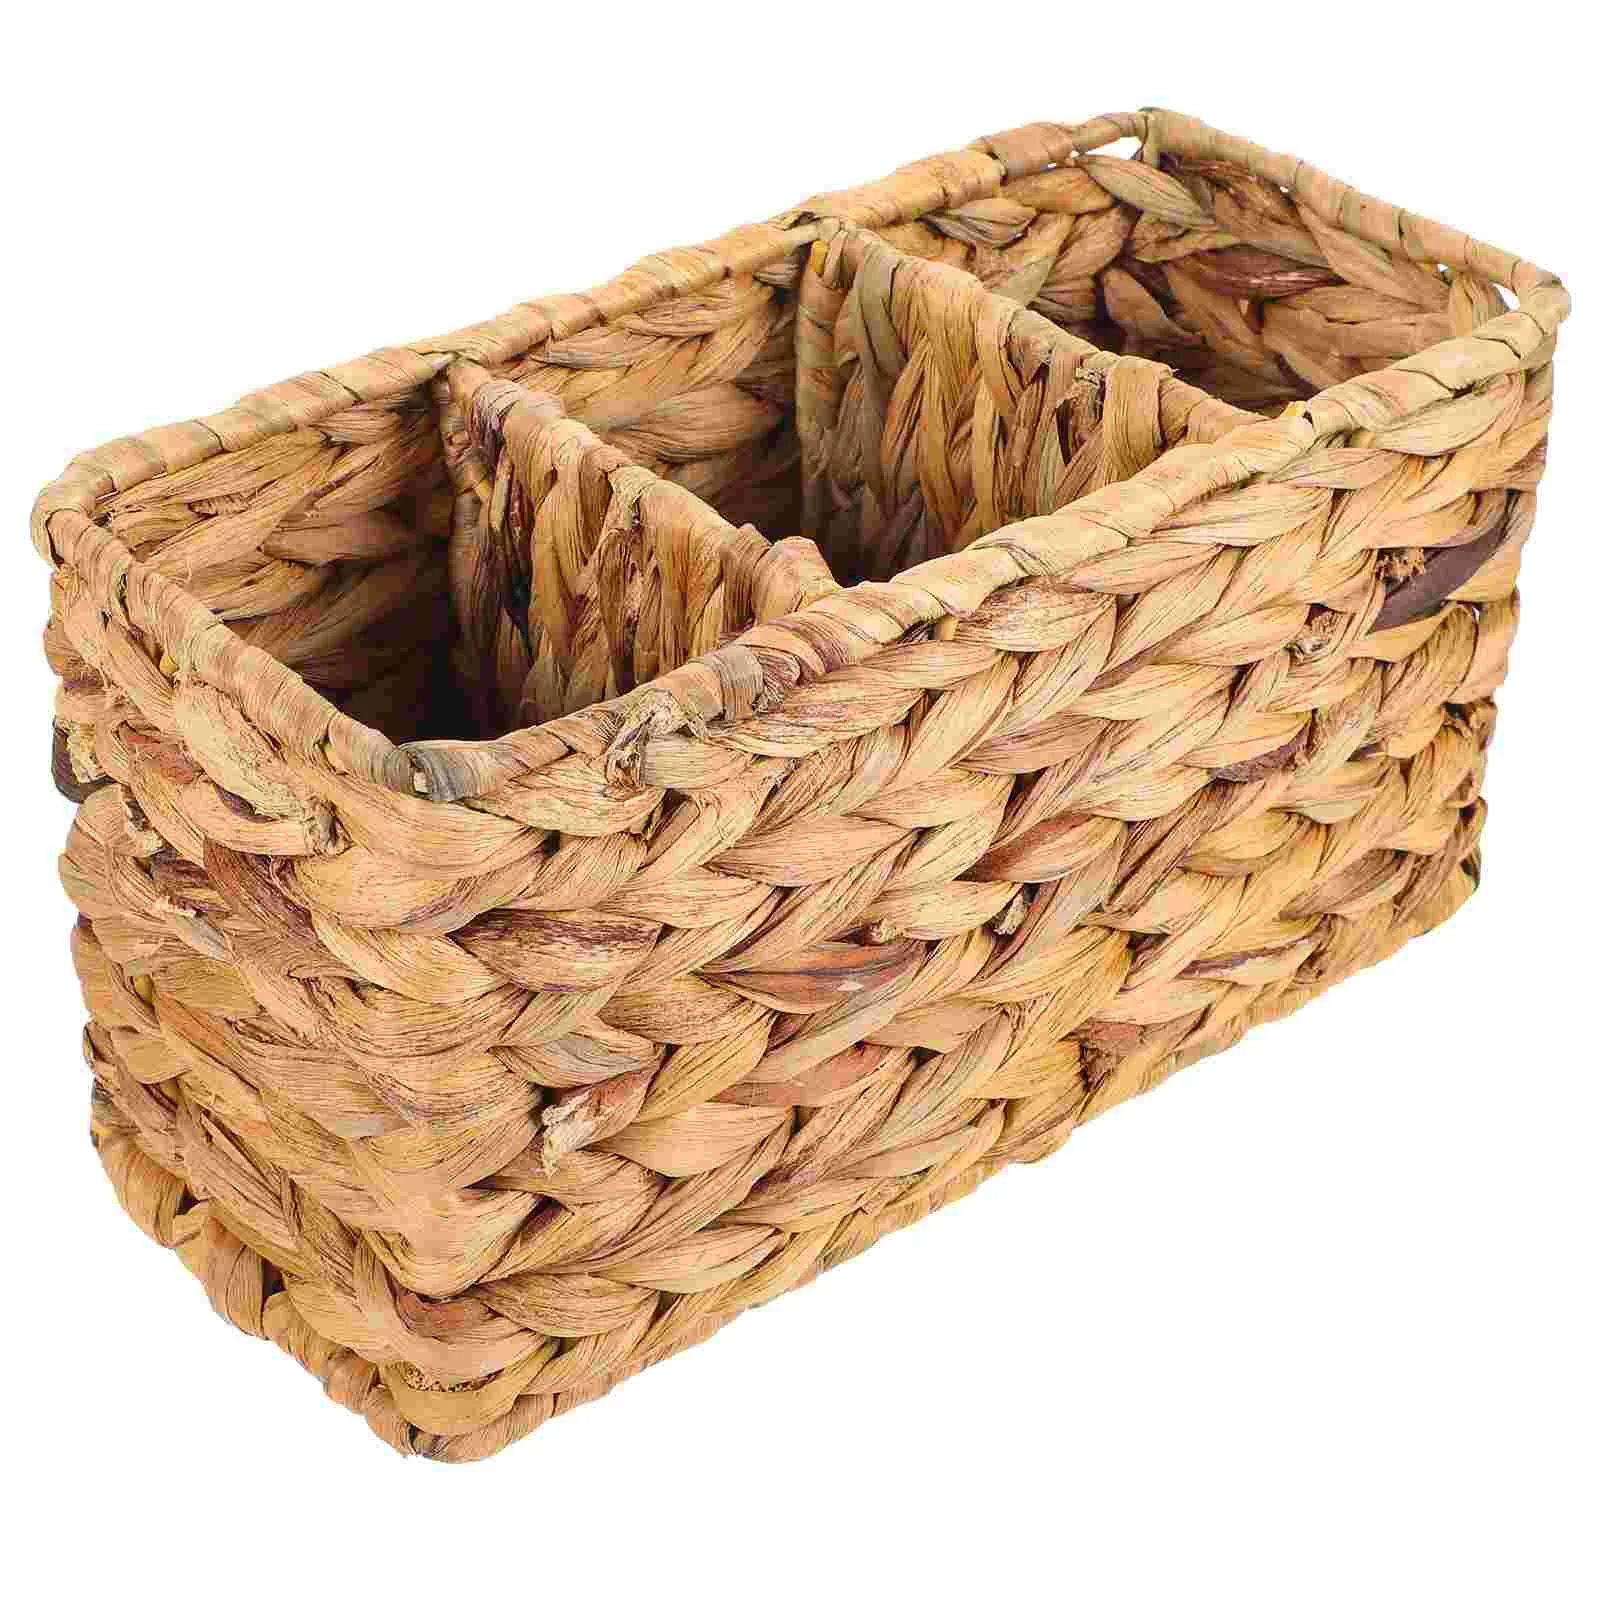 

Woven Storage Basket Hollow Sundry Container Sundries Organizer Box Desktop Gourd Grass Toilet Tank Water Hyacinth